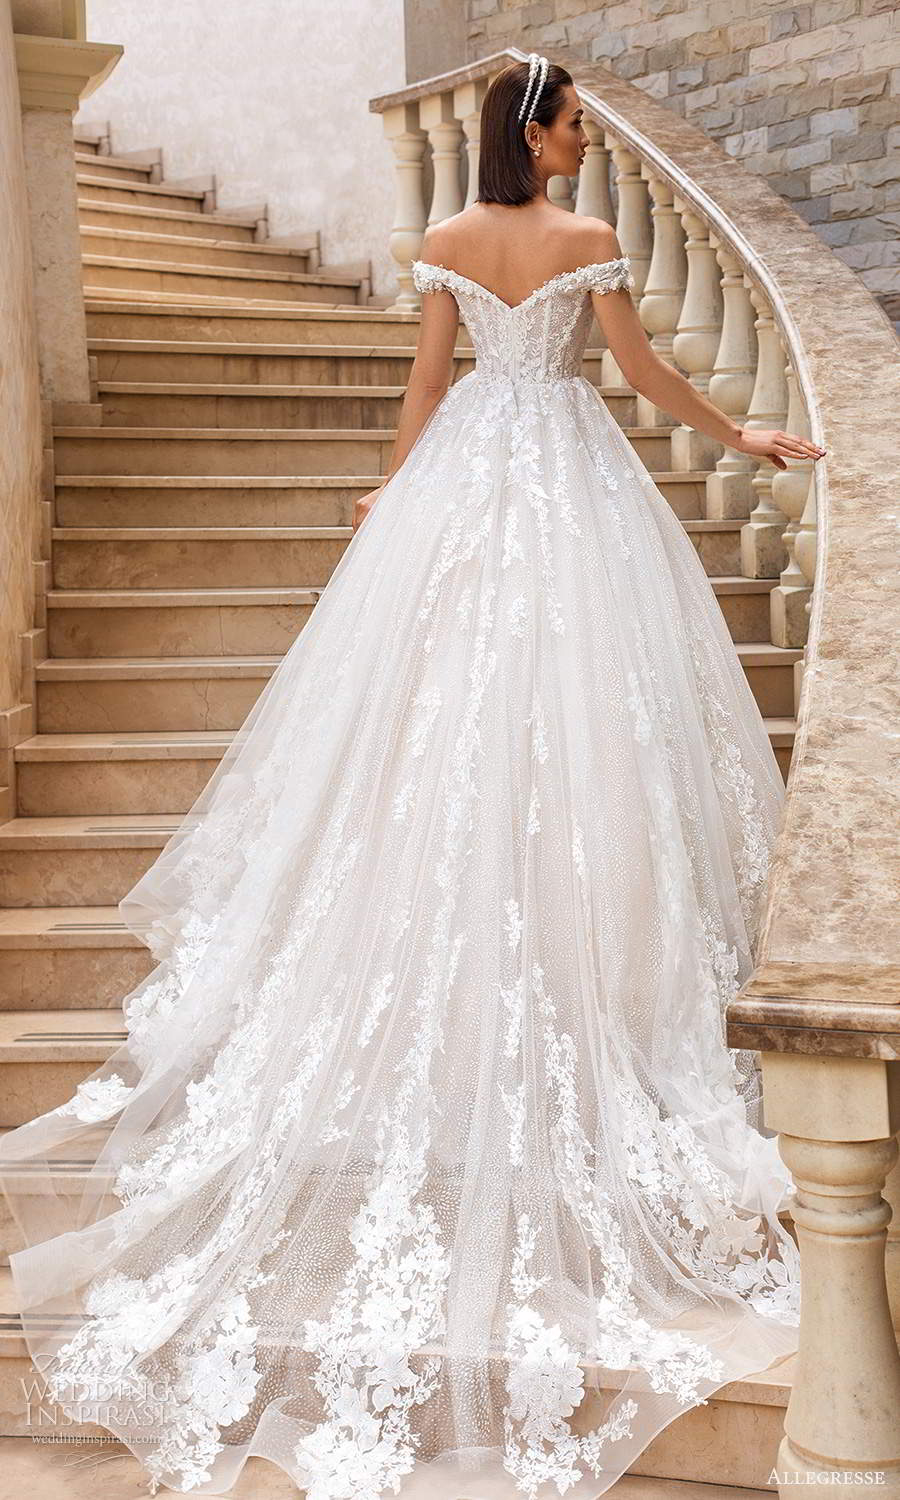 Allegresse 2021 Wedding Dresses — "Timeless Love" Bridal ...